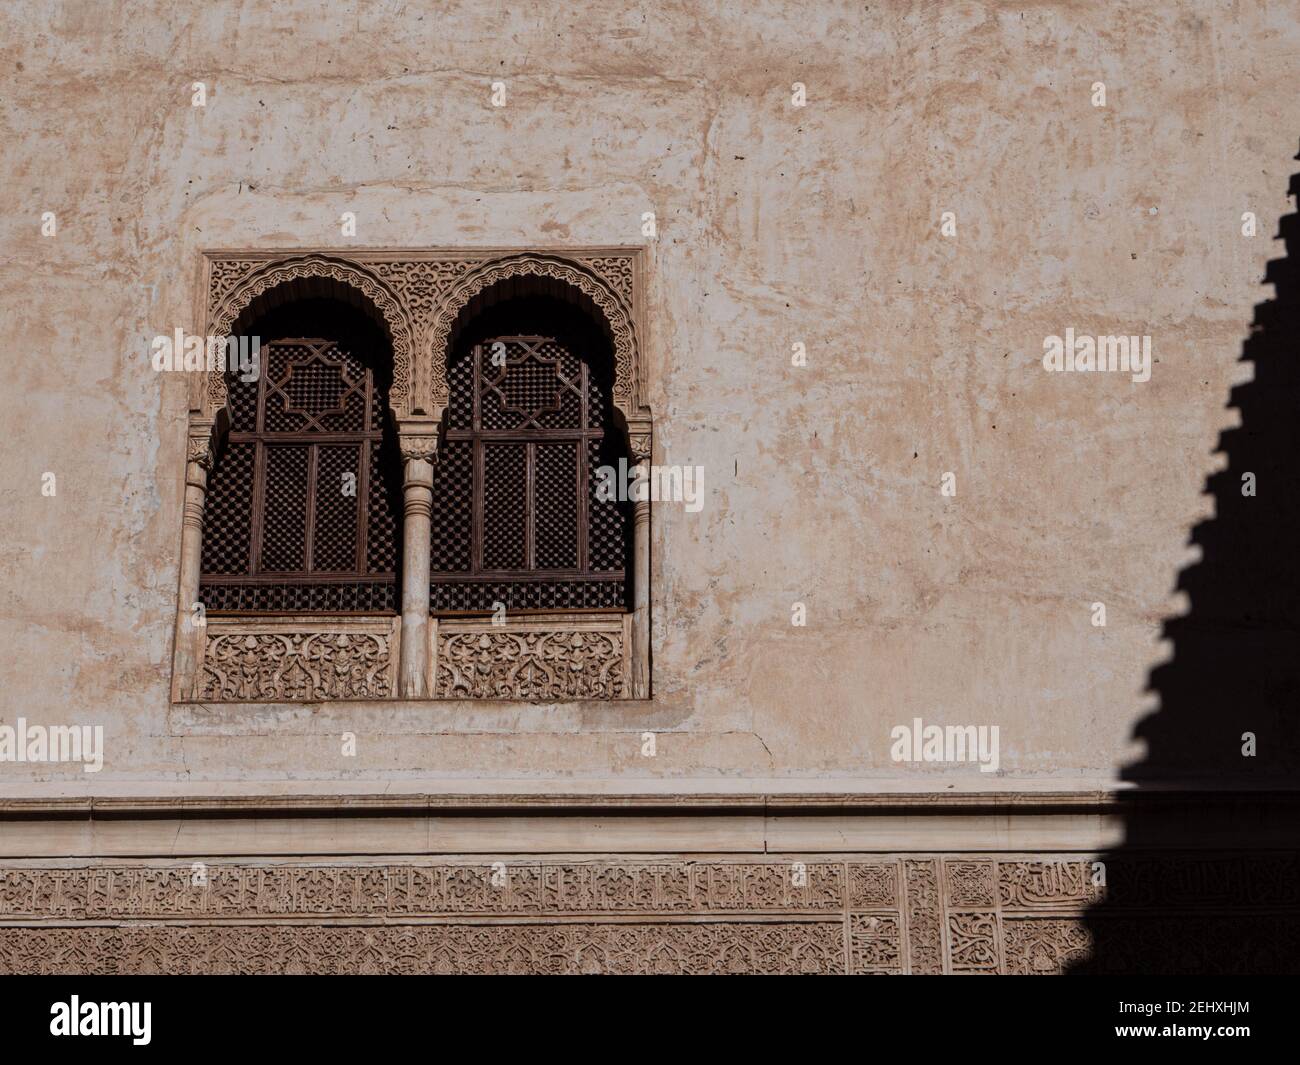 Ornate windows at The Alhambra Granada Spain. Stock Photo